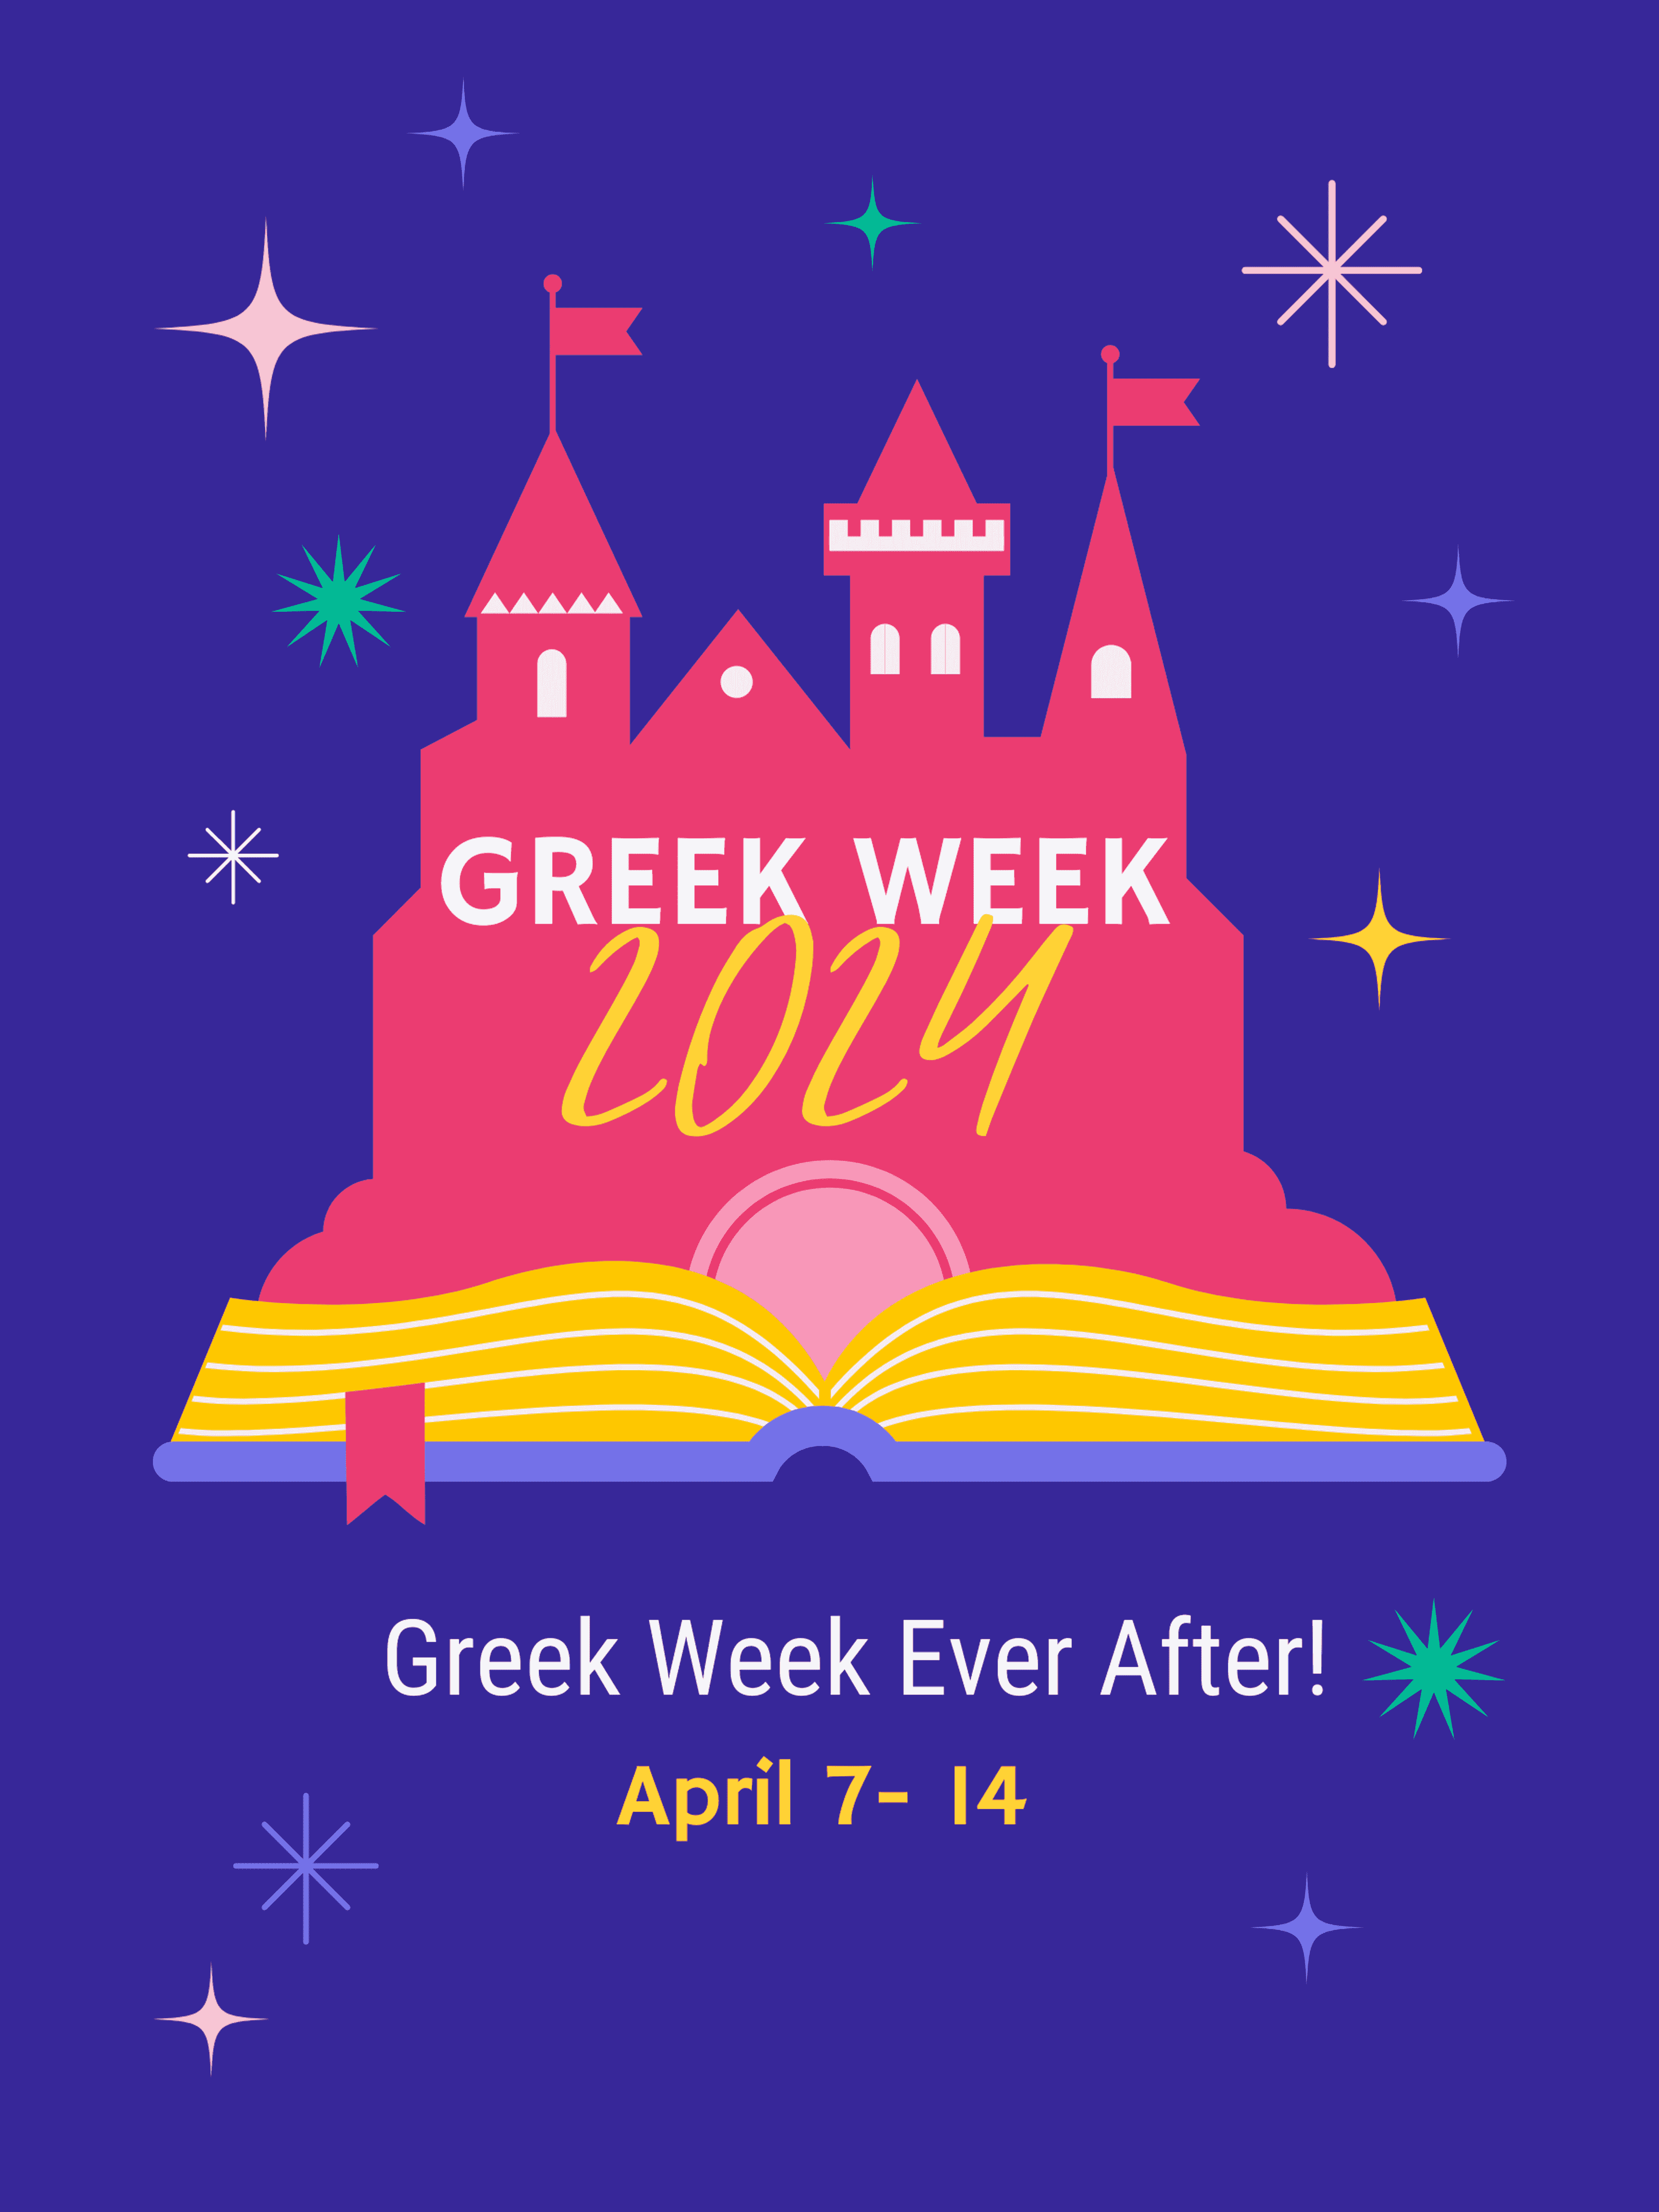 Greek Week “Ever After” will make its start on April 7